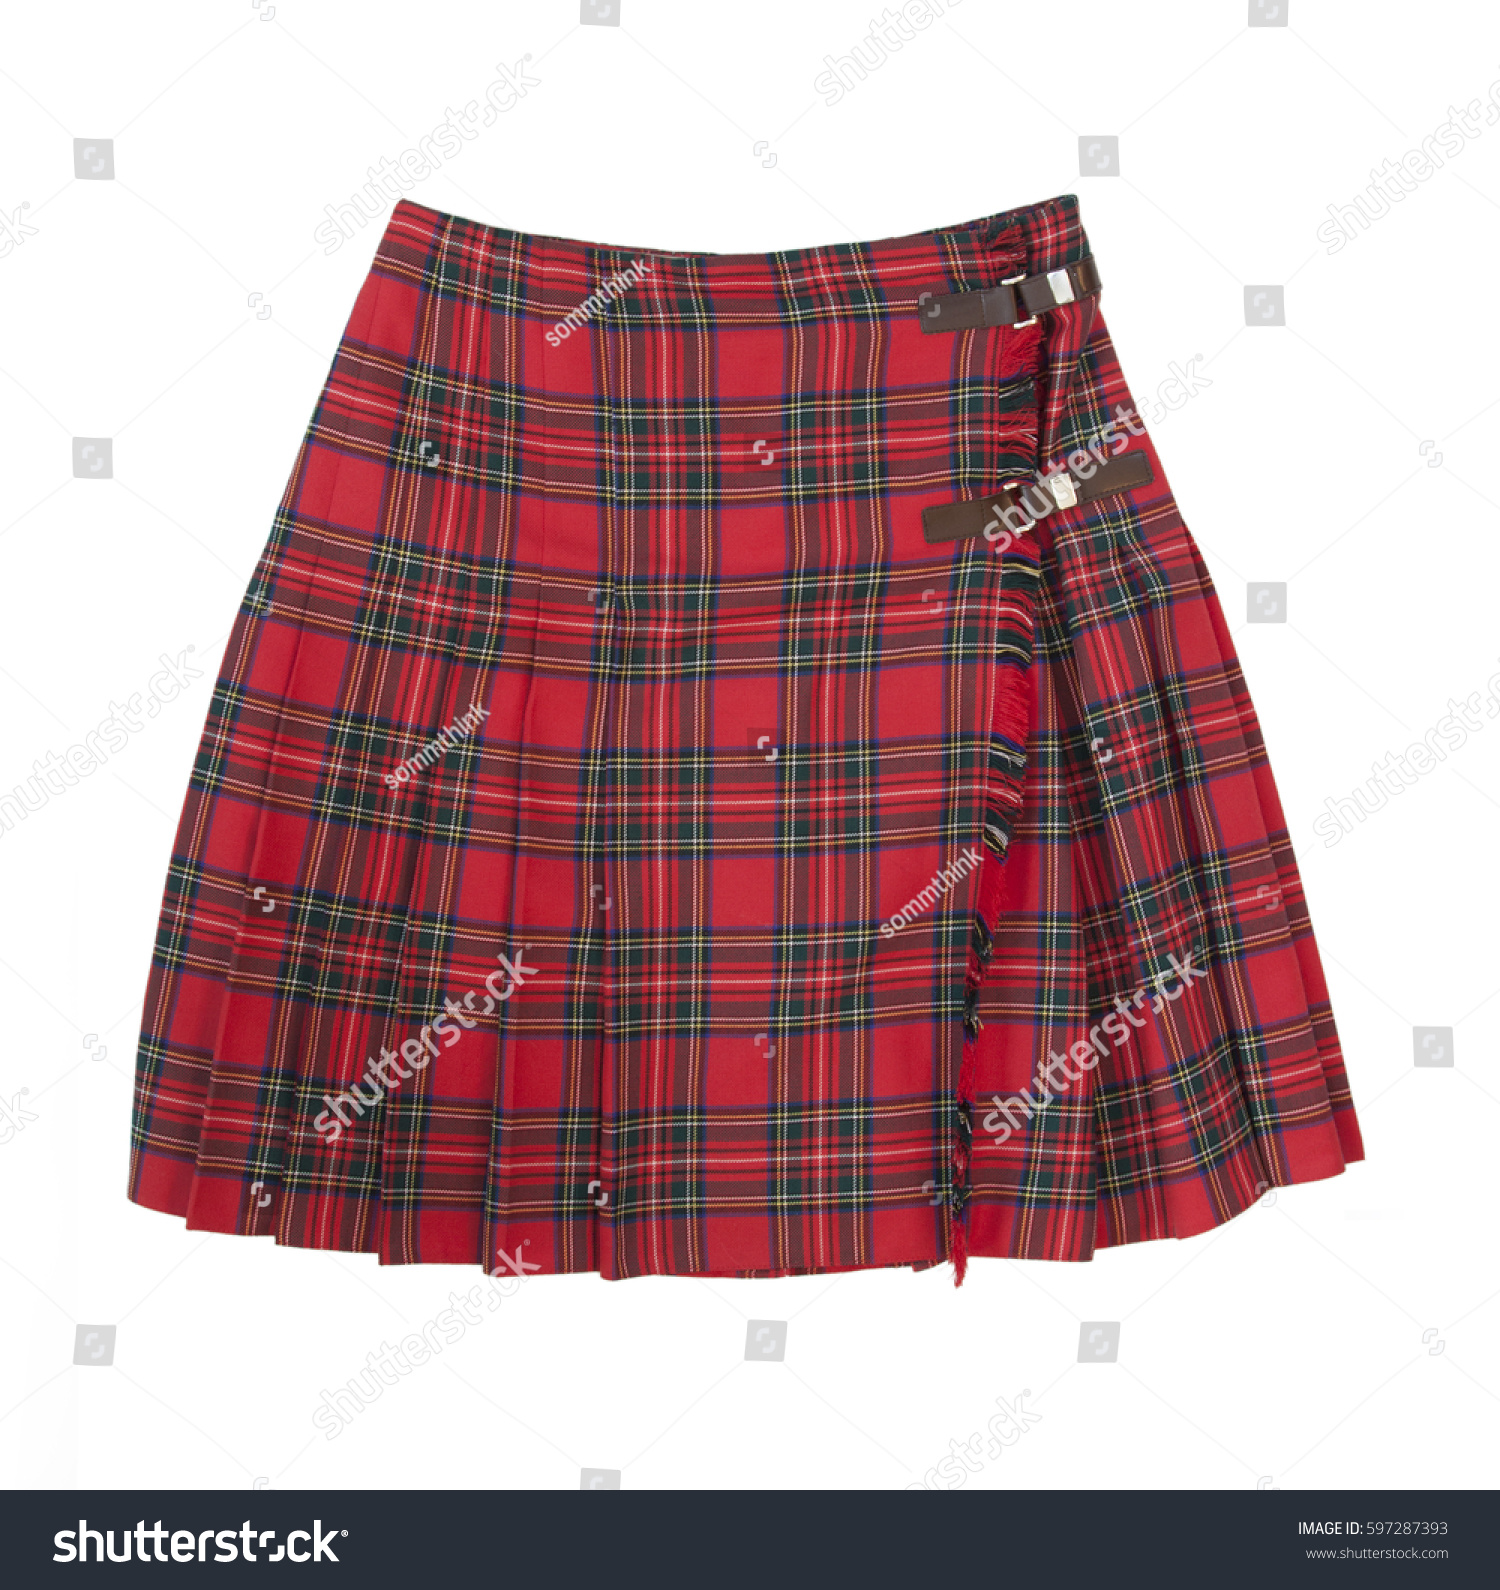 4,384 Scottish skirts Stock Photos, Images & Photography | Shutterstock